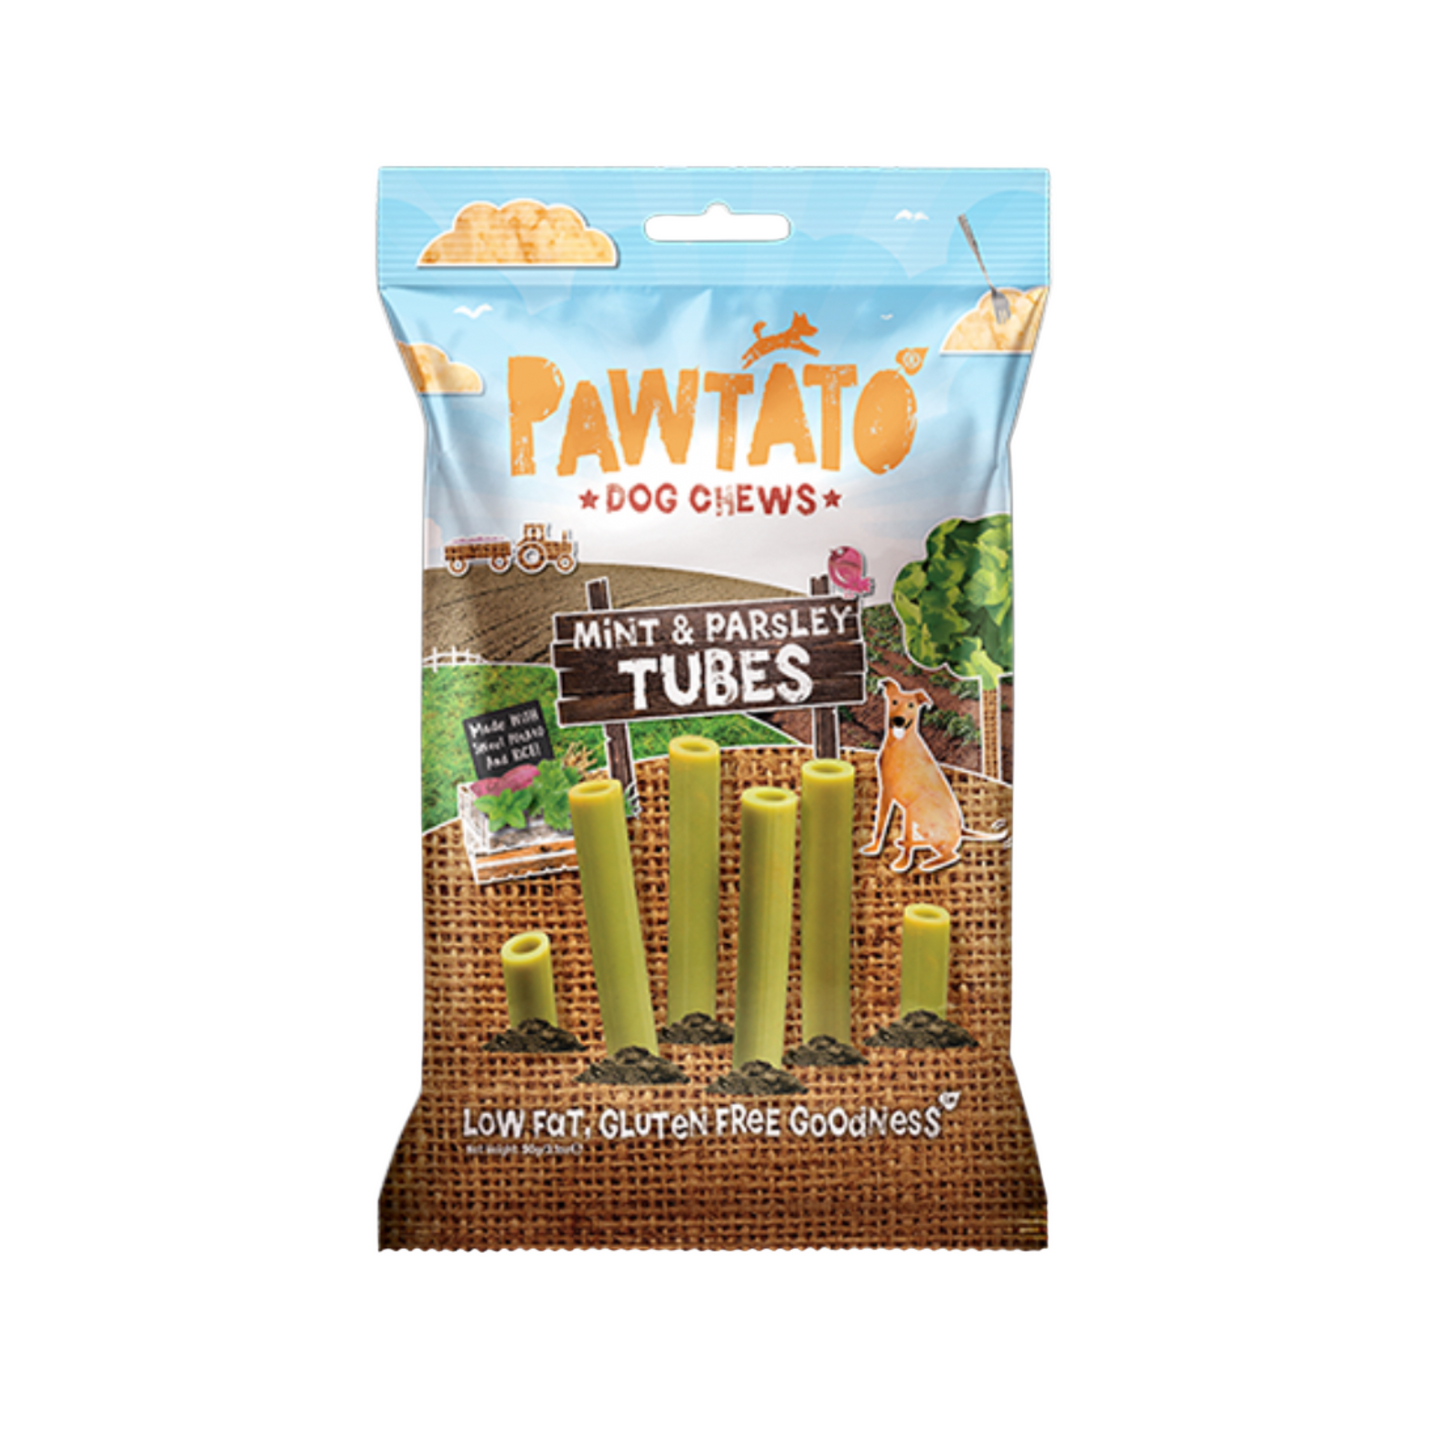 Pawtato Mint & Parsley Tubes Dog Chews Pack Of 4, 90g